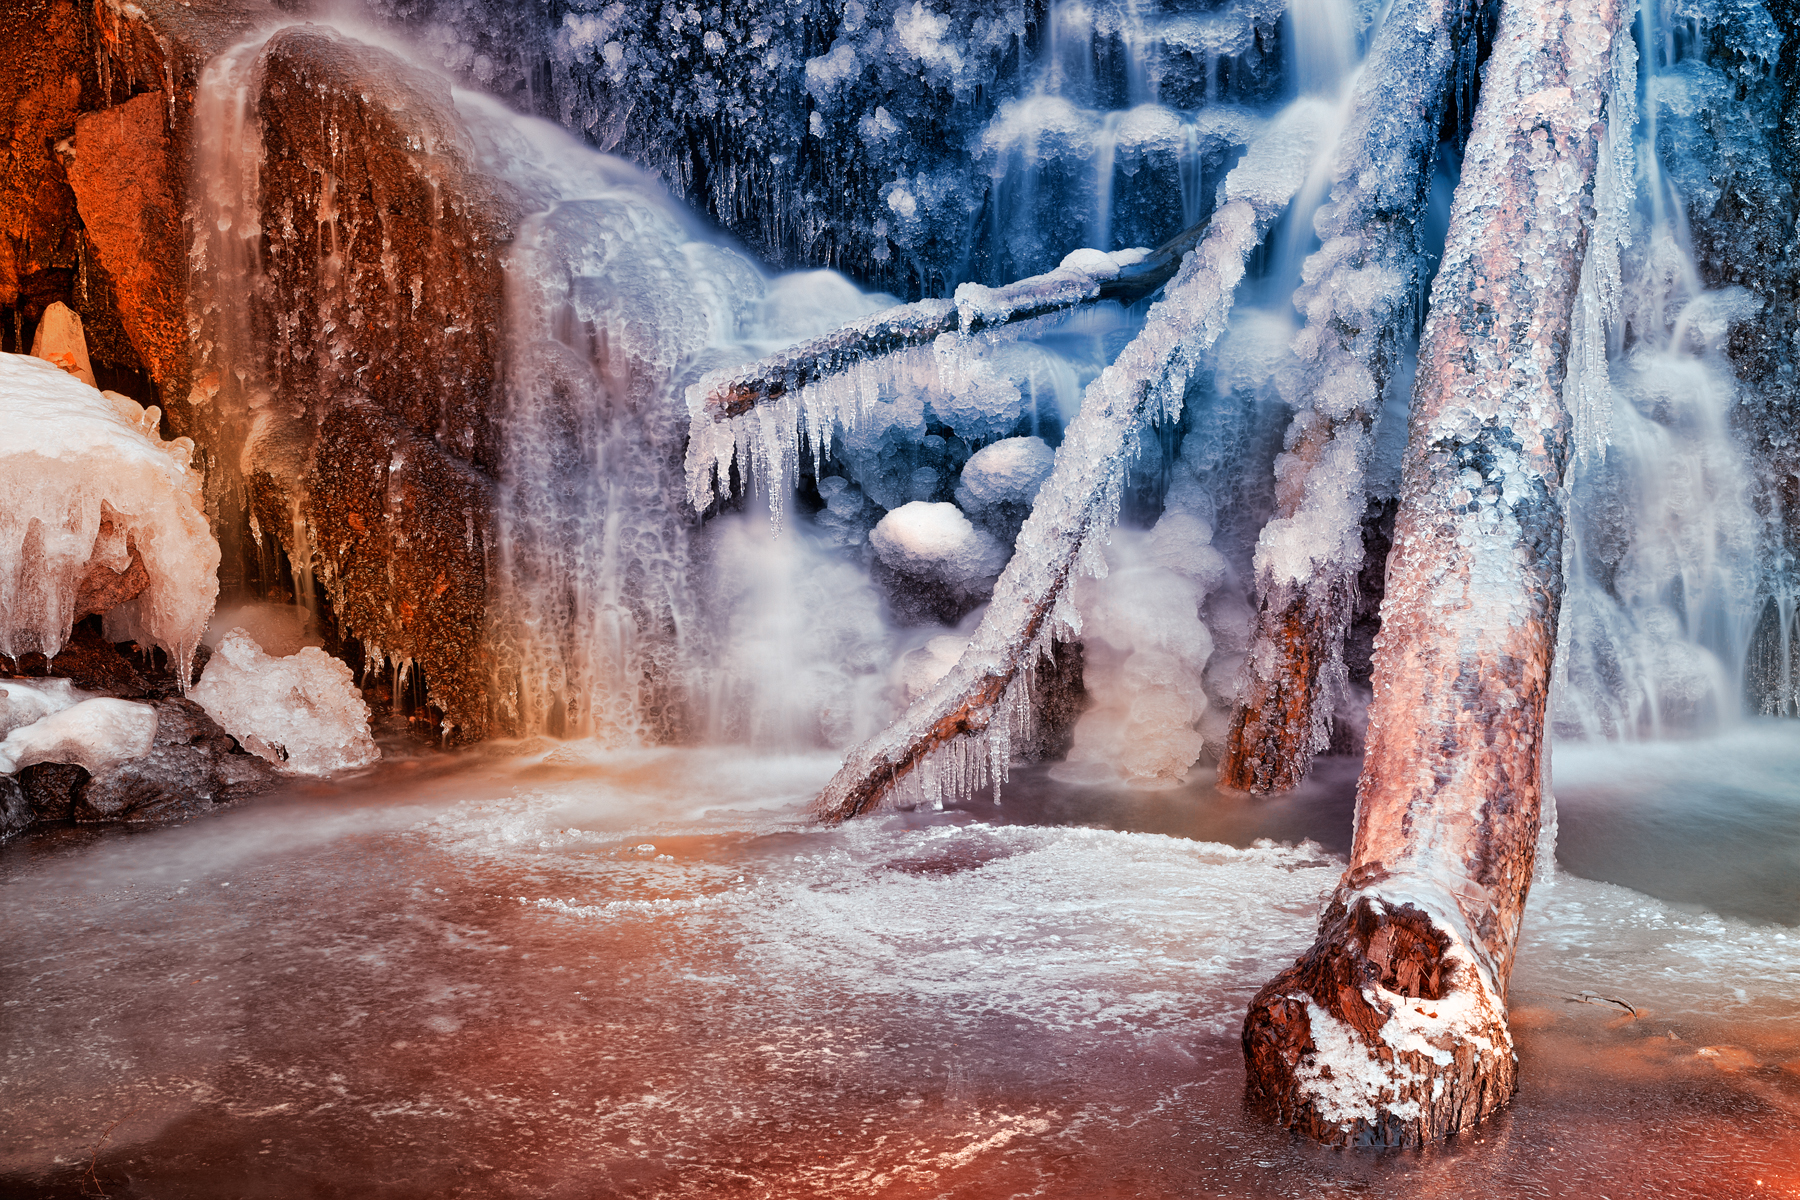 Frozen avalon fantasy falls - hdr photo